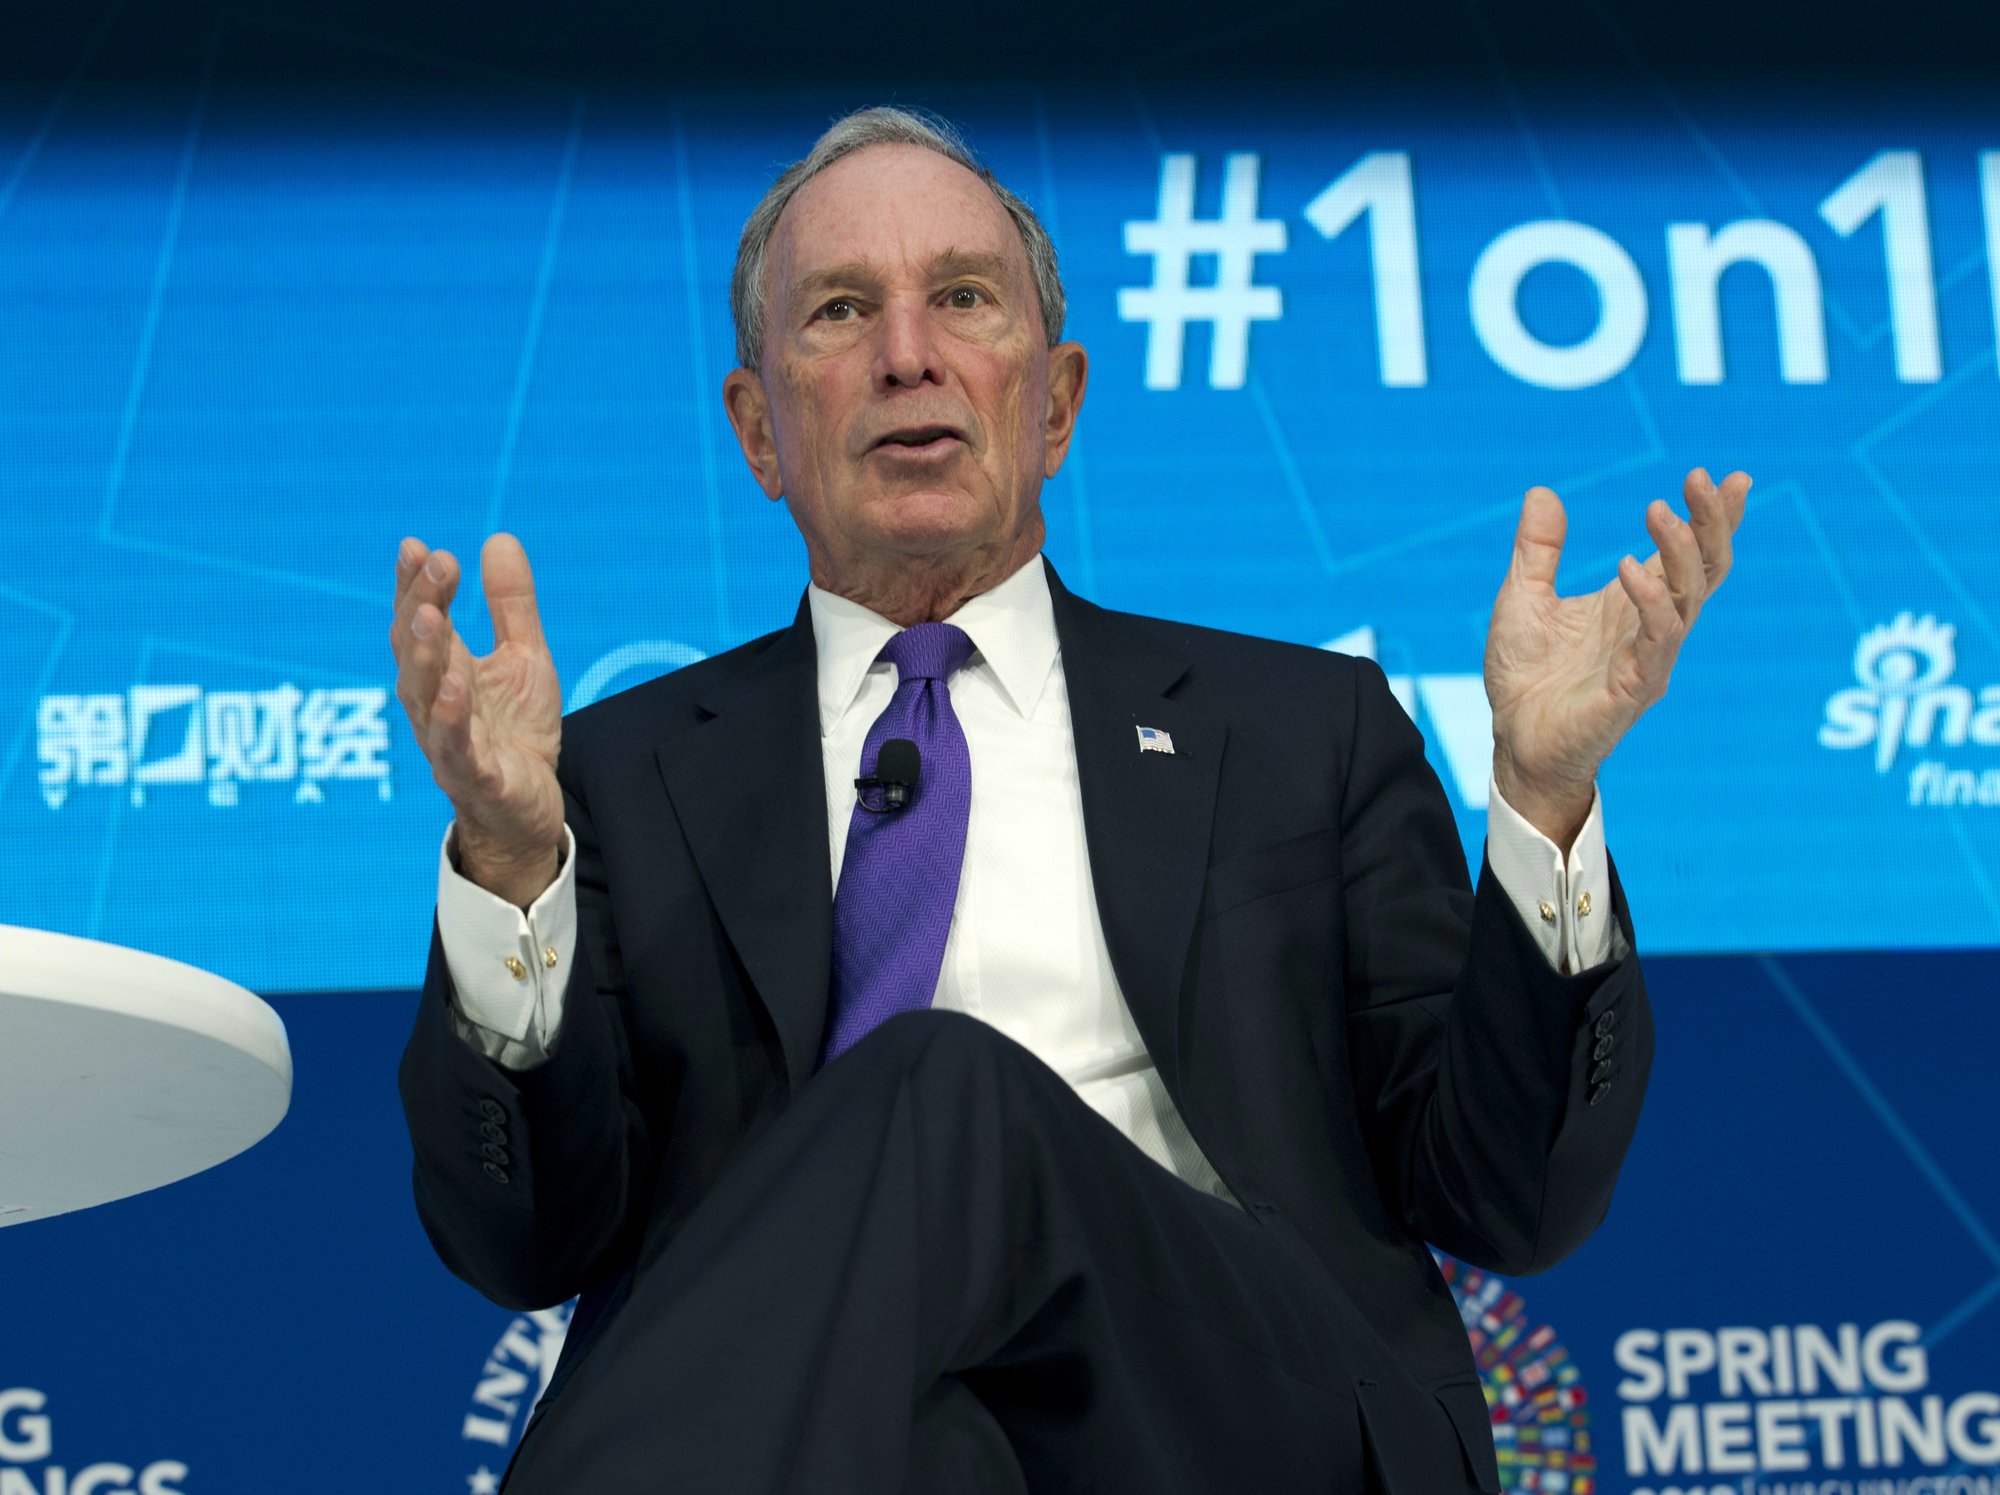 Bloomberg donates 'unprecedented' $1.8B to Johns Hopkins